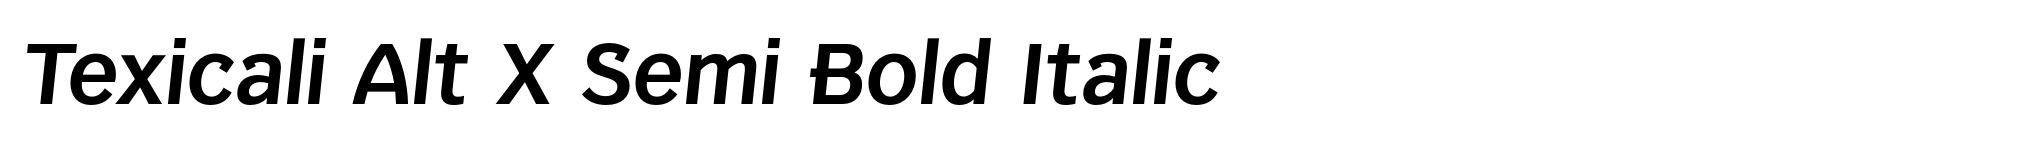 Texicali Alt X Semi Bold Italic image